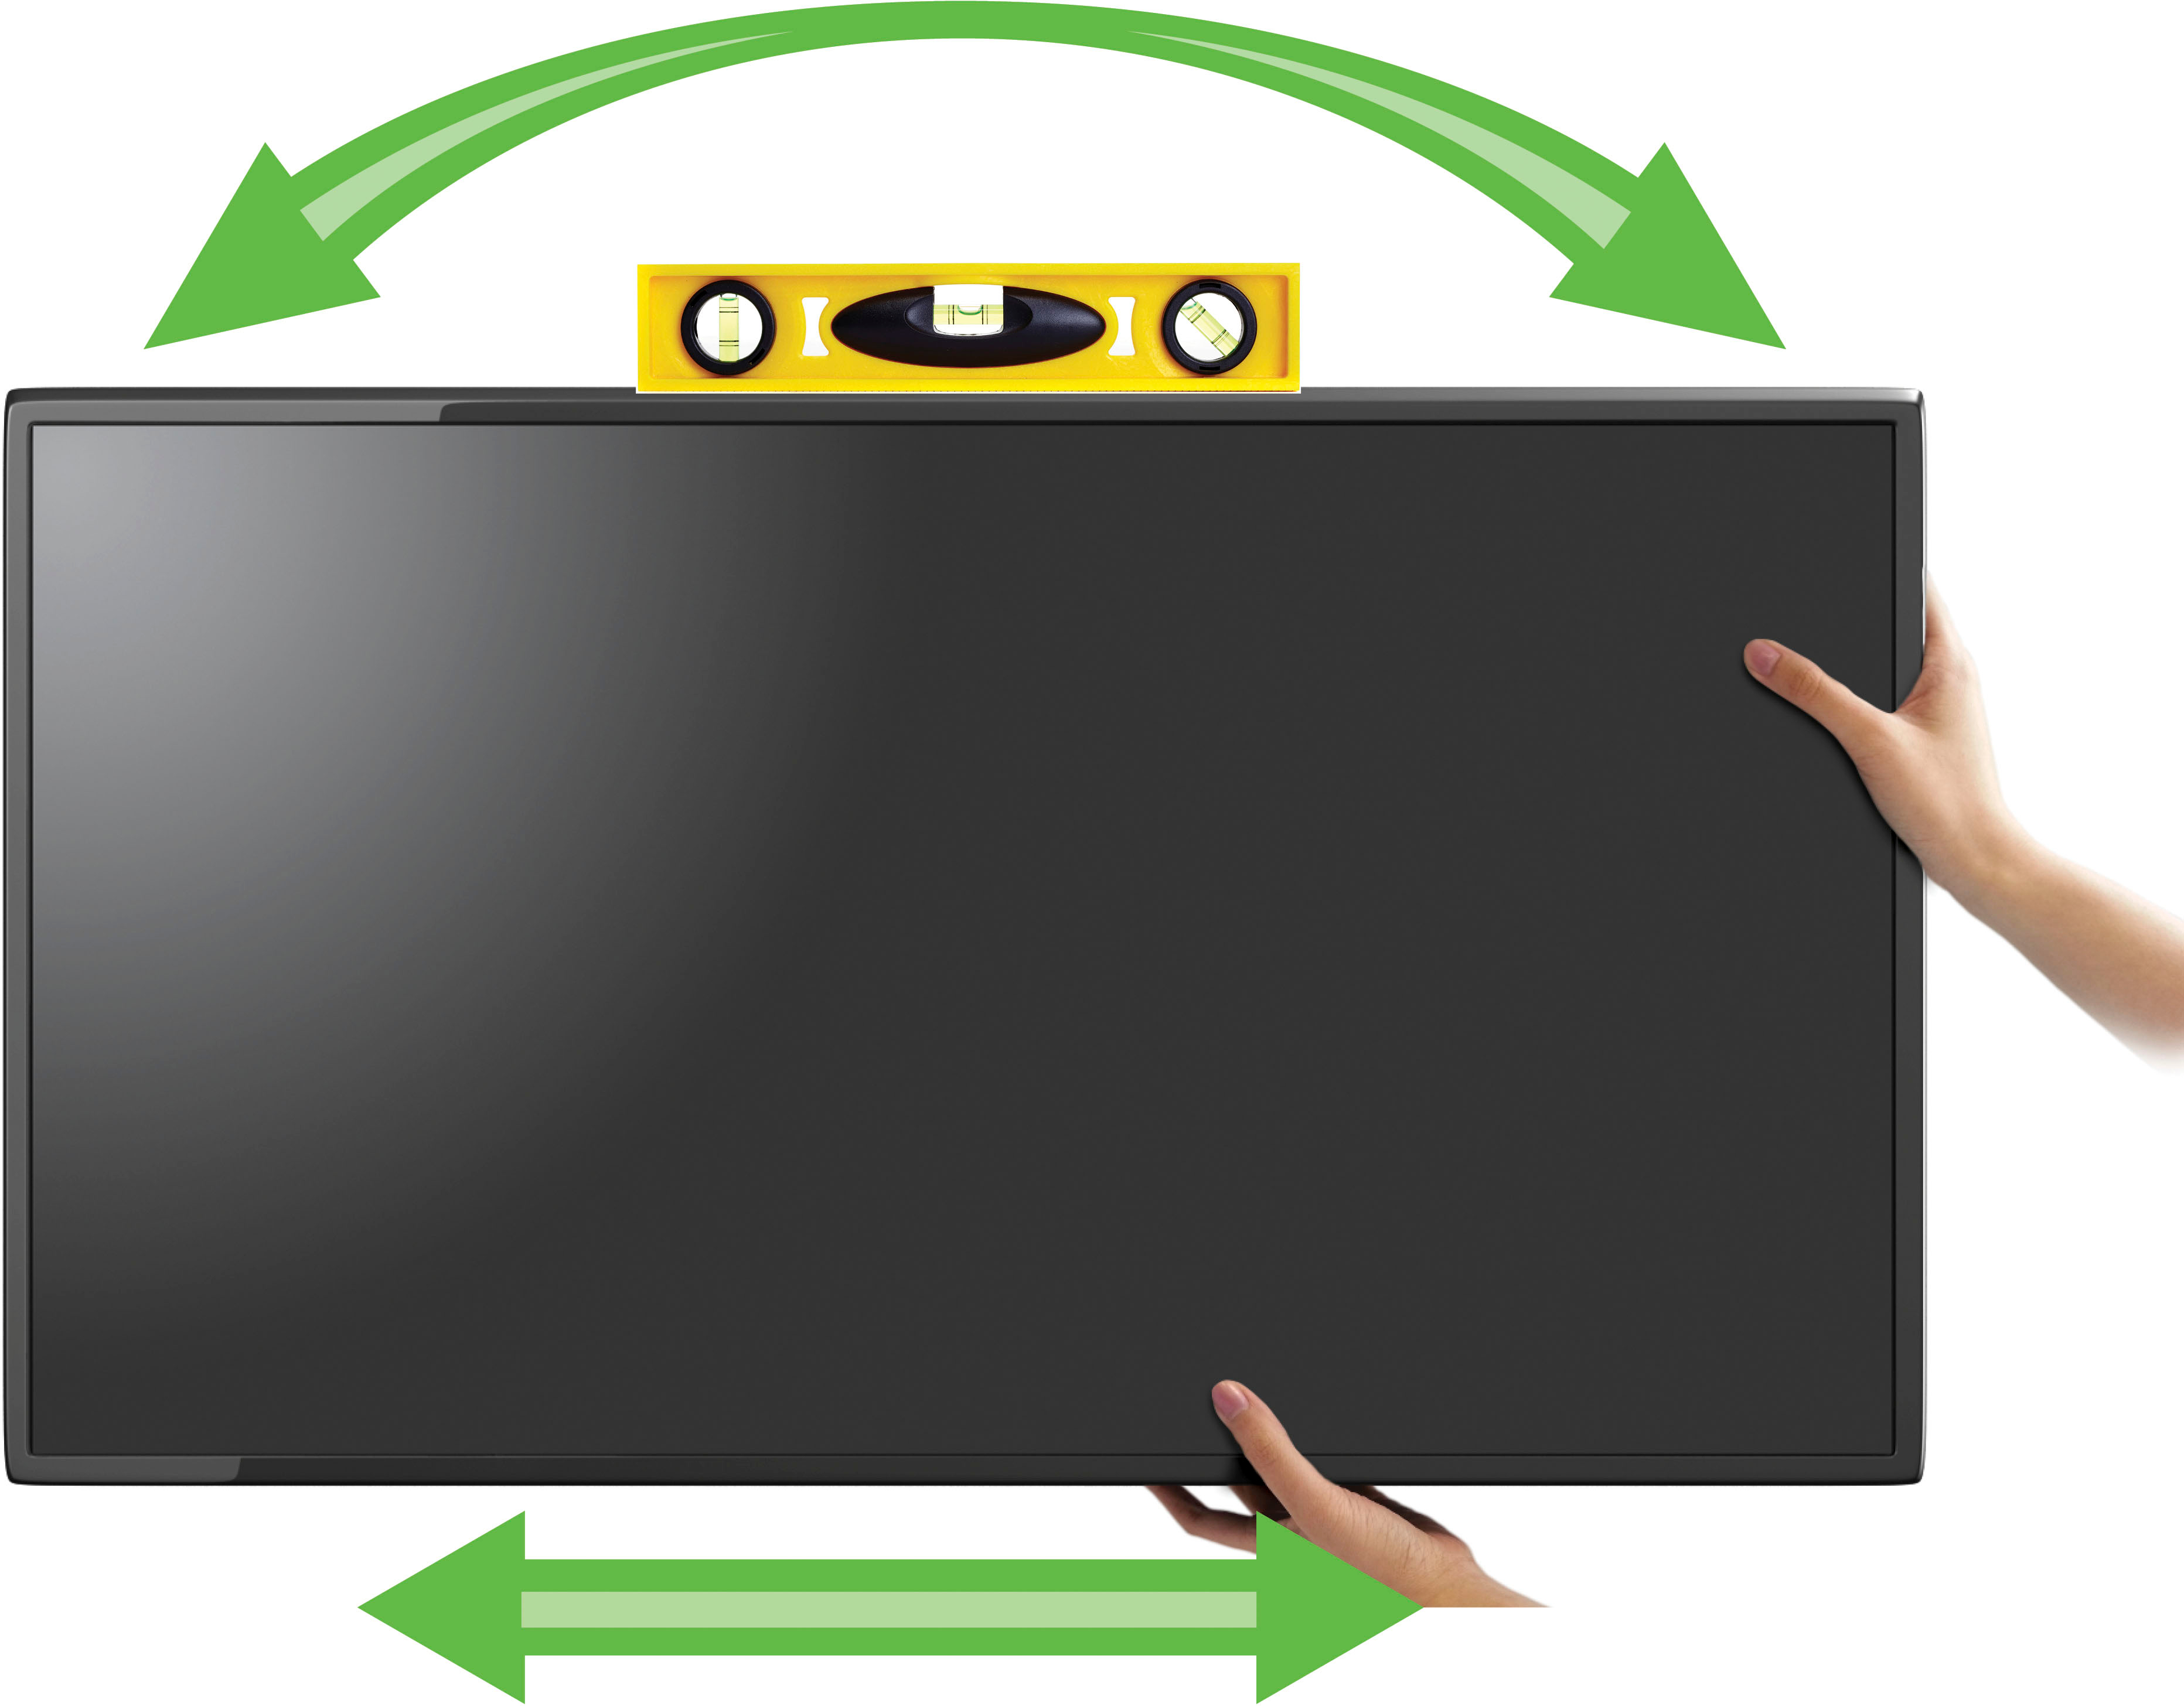 SANUS Elite Advanced Tilt TV Wall Mount For Most 46 95 TVs Extends 5.9  for Easy Cable Access and Max Tilt Black BXT3-B1 - Best Buy